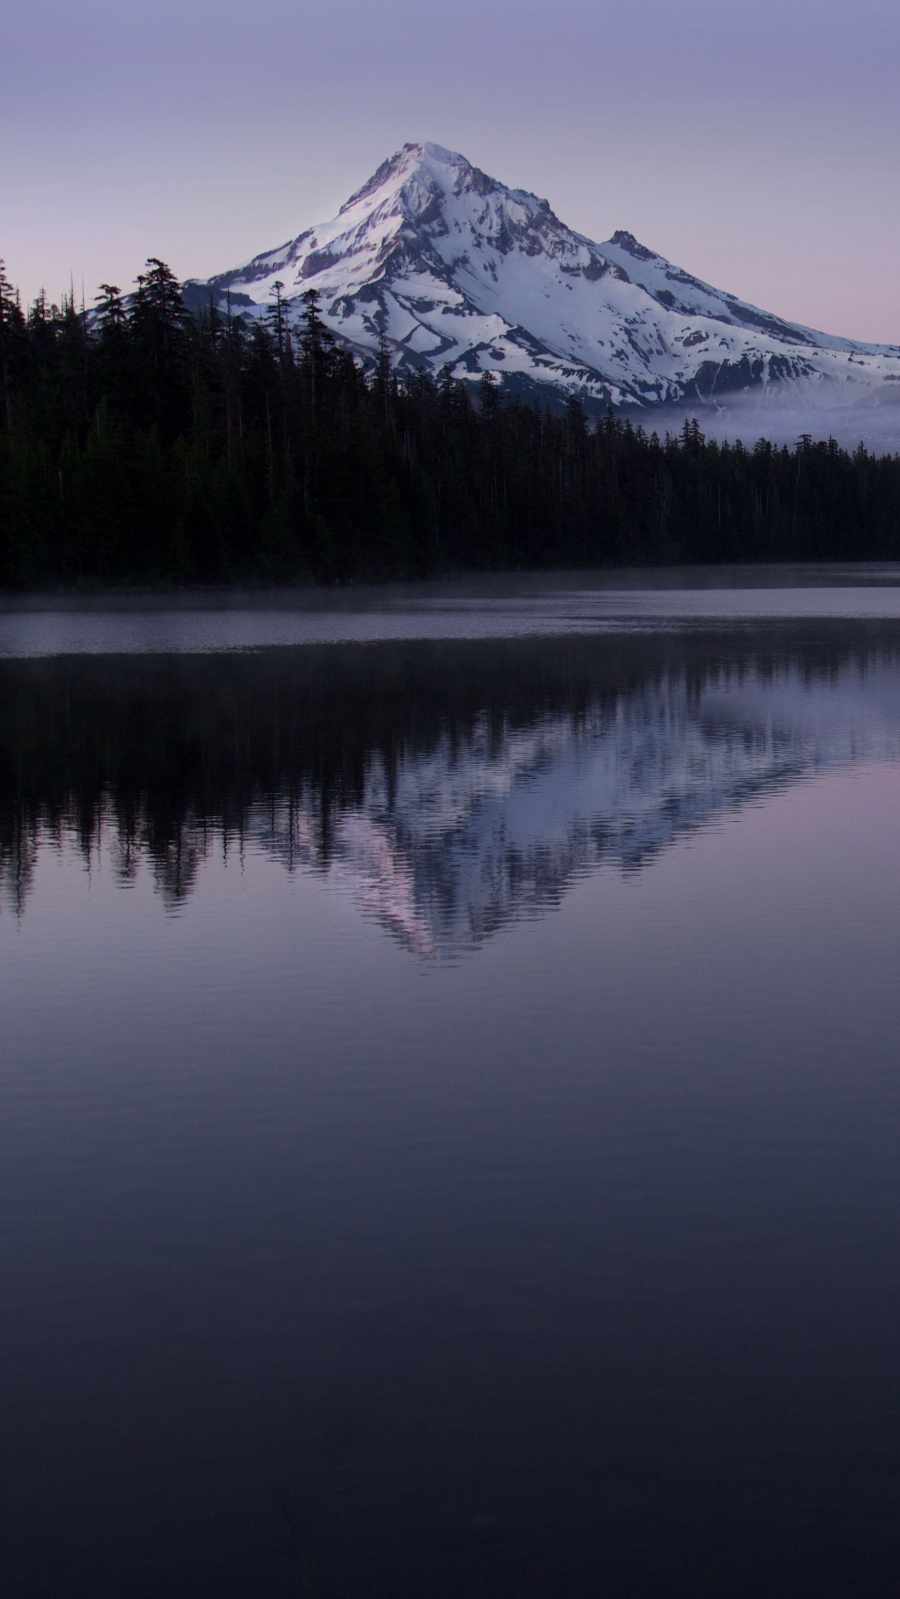 Lake Mountain Reflection iPhone Wallpaper